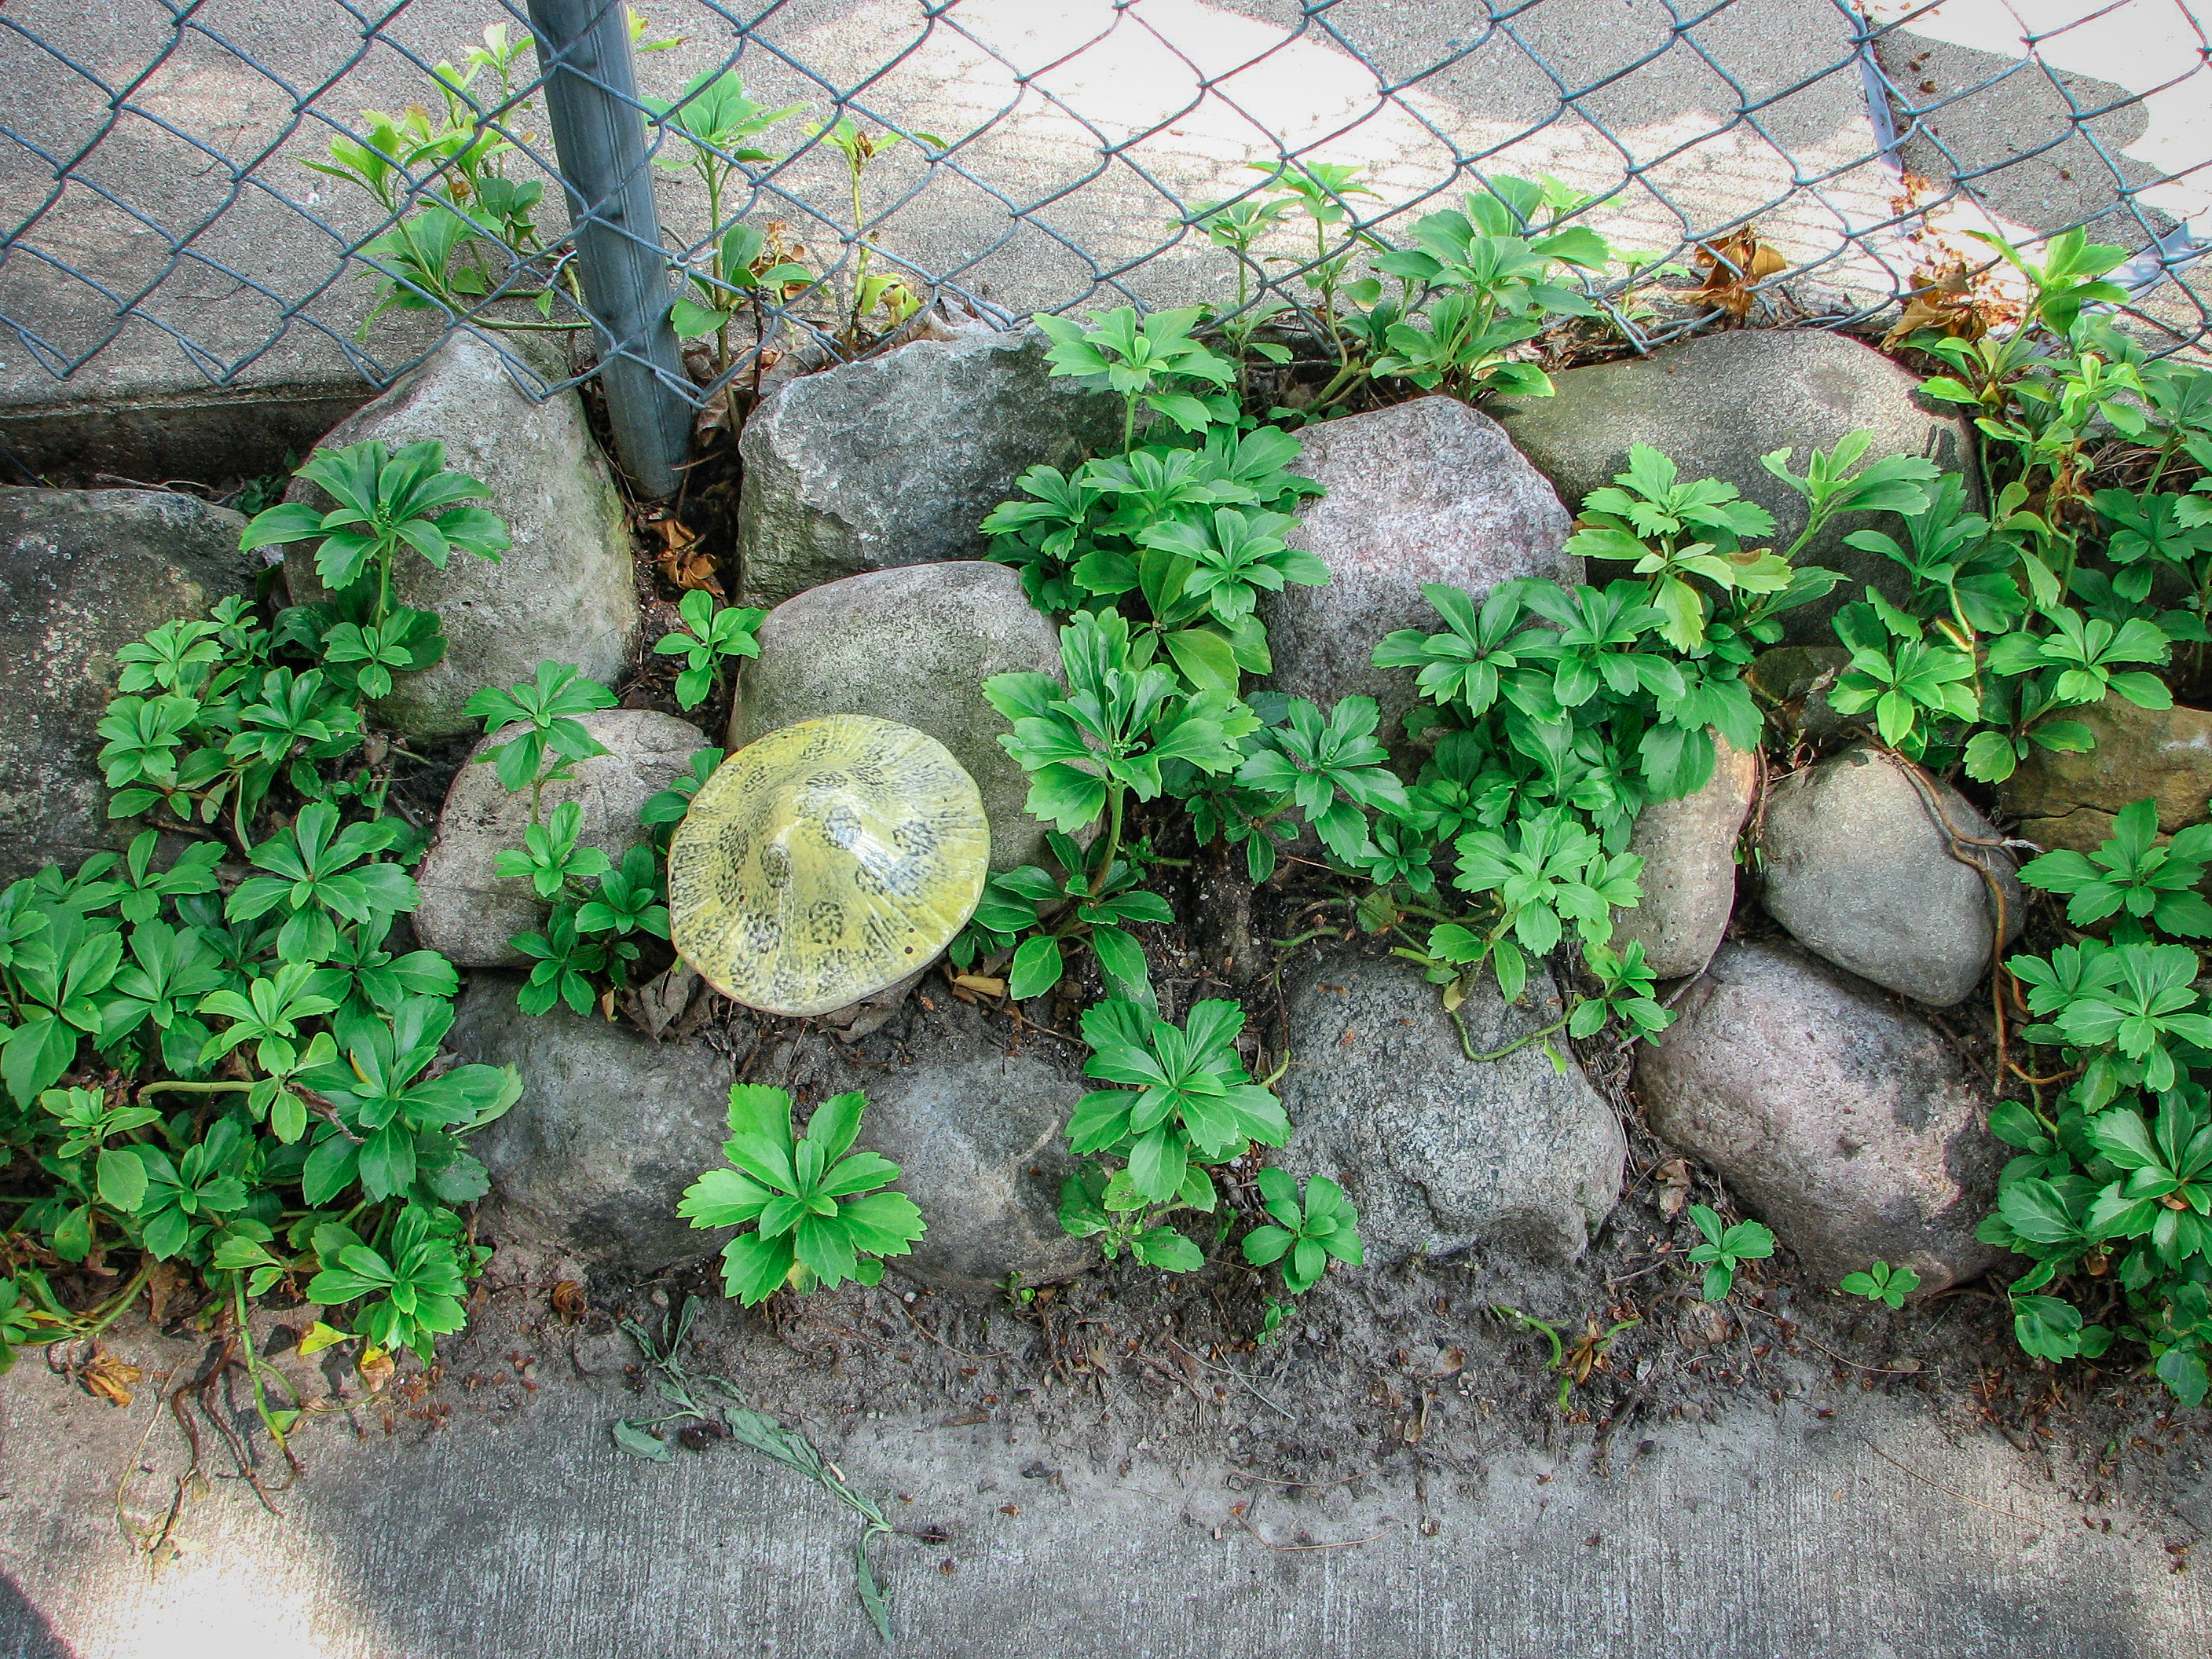 pachysandra, rocks, and ceramic mushroom along fence